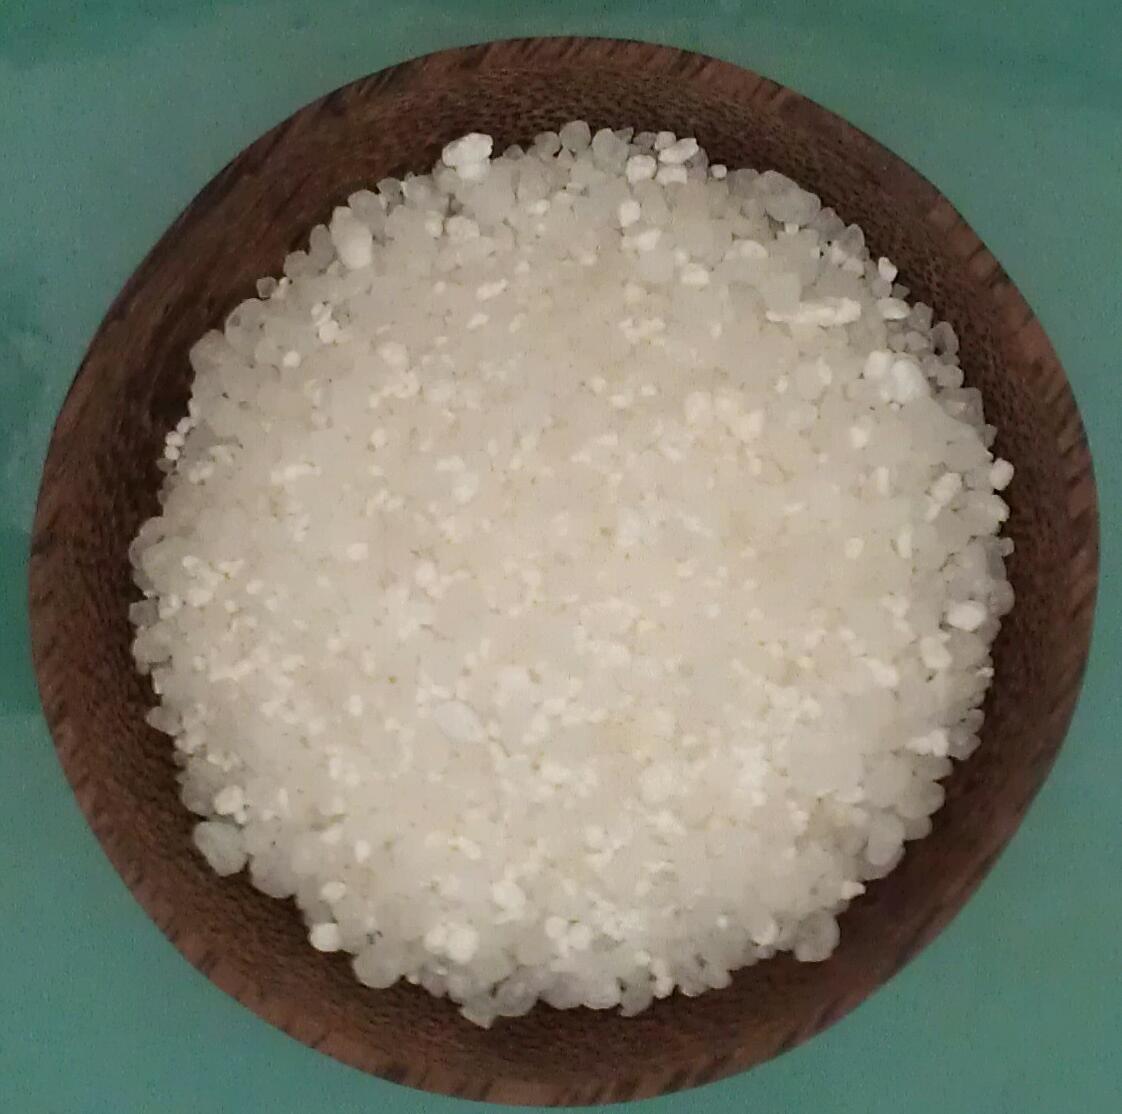 Therapeutic Benefits of Dead Sea Salt